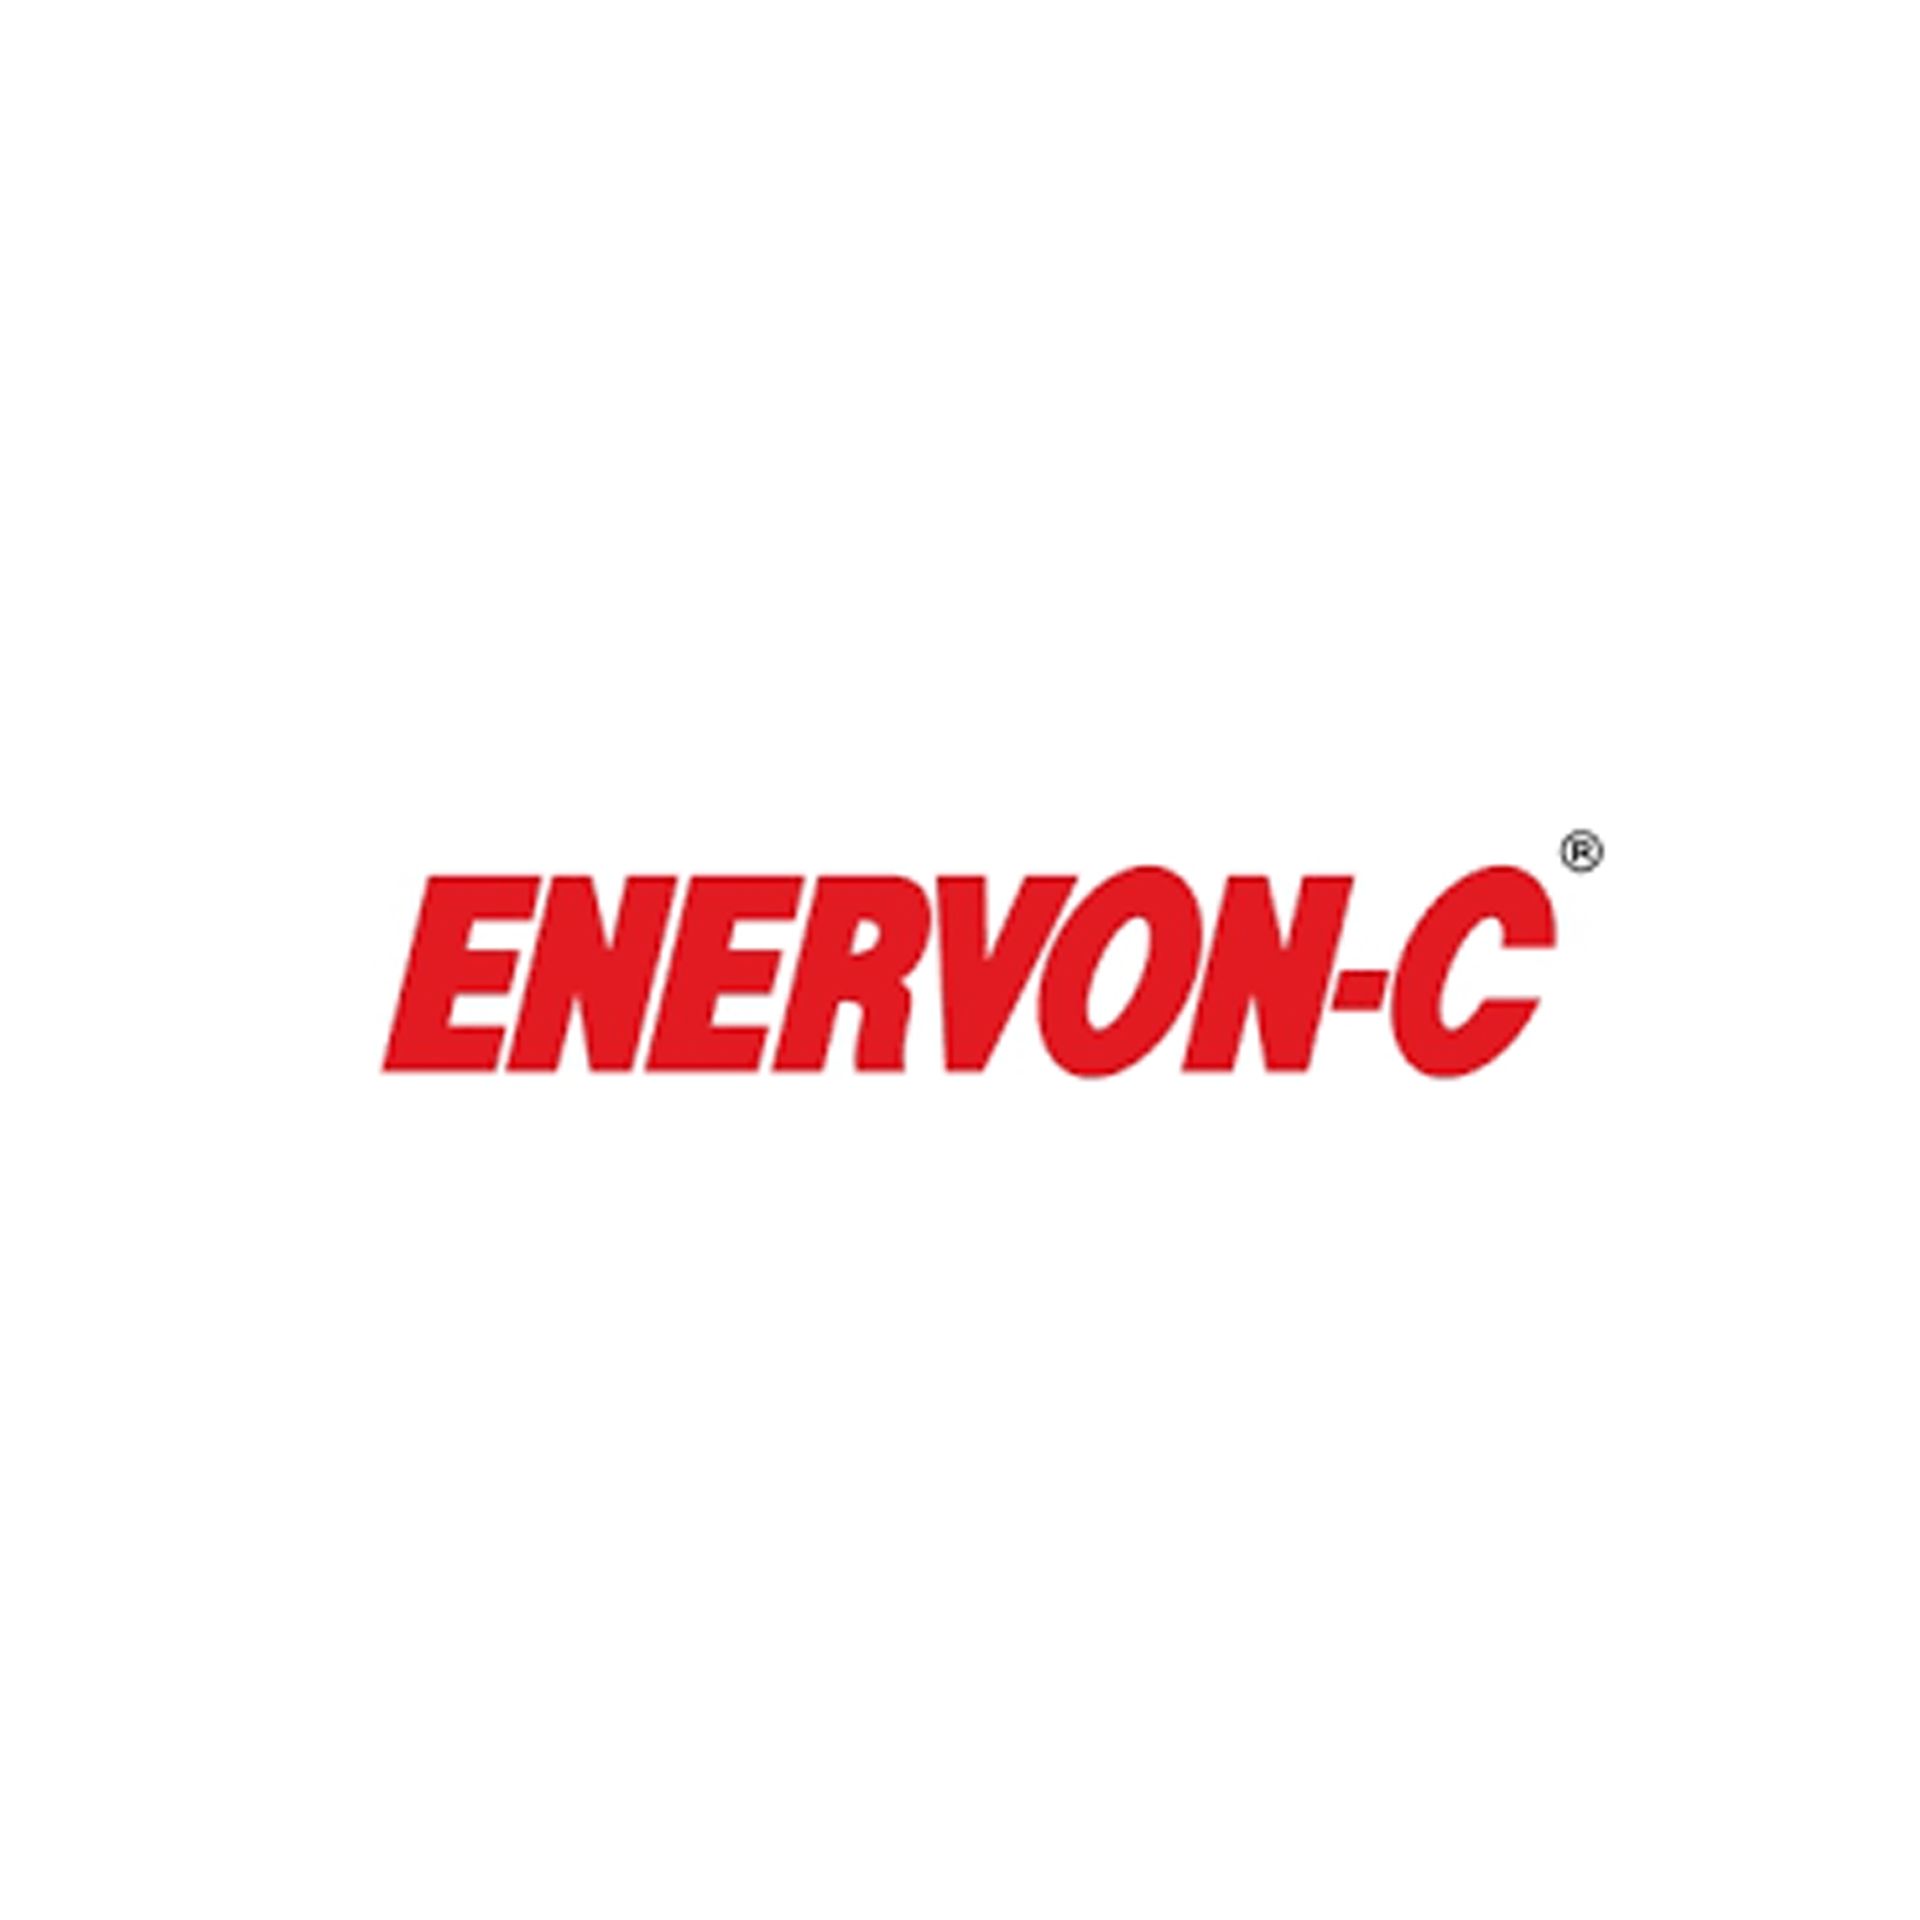 Product Brand: Envervon-C